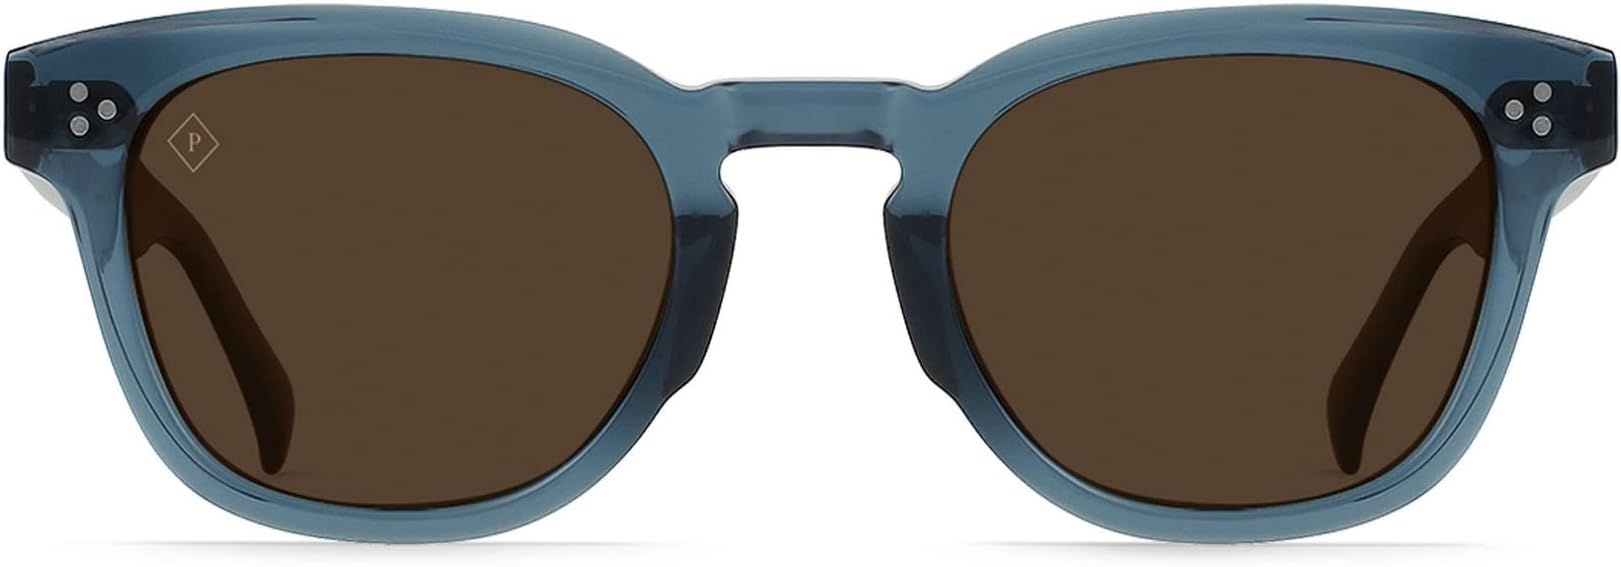 Солнцезащитные очки Squire 49 RAEN Optics, цвет Absinthe/Vibrant Brown Polarized солнцезащитные очки raen rece absinthe